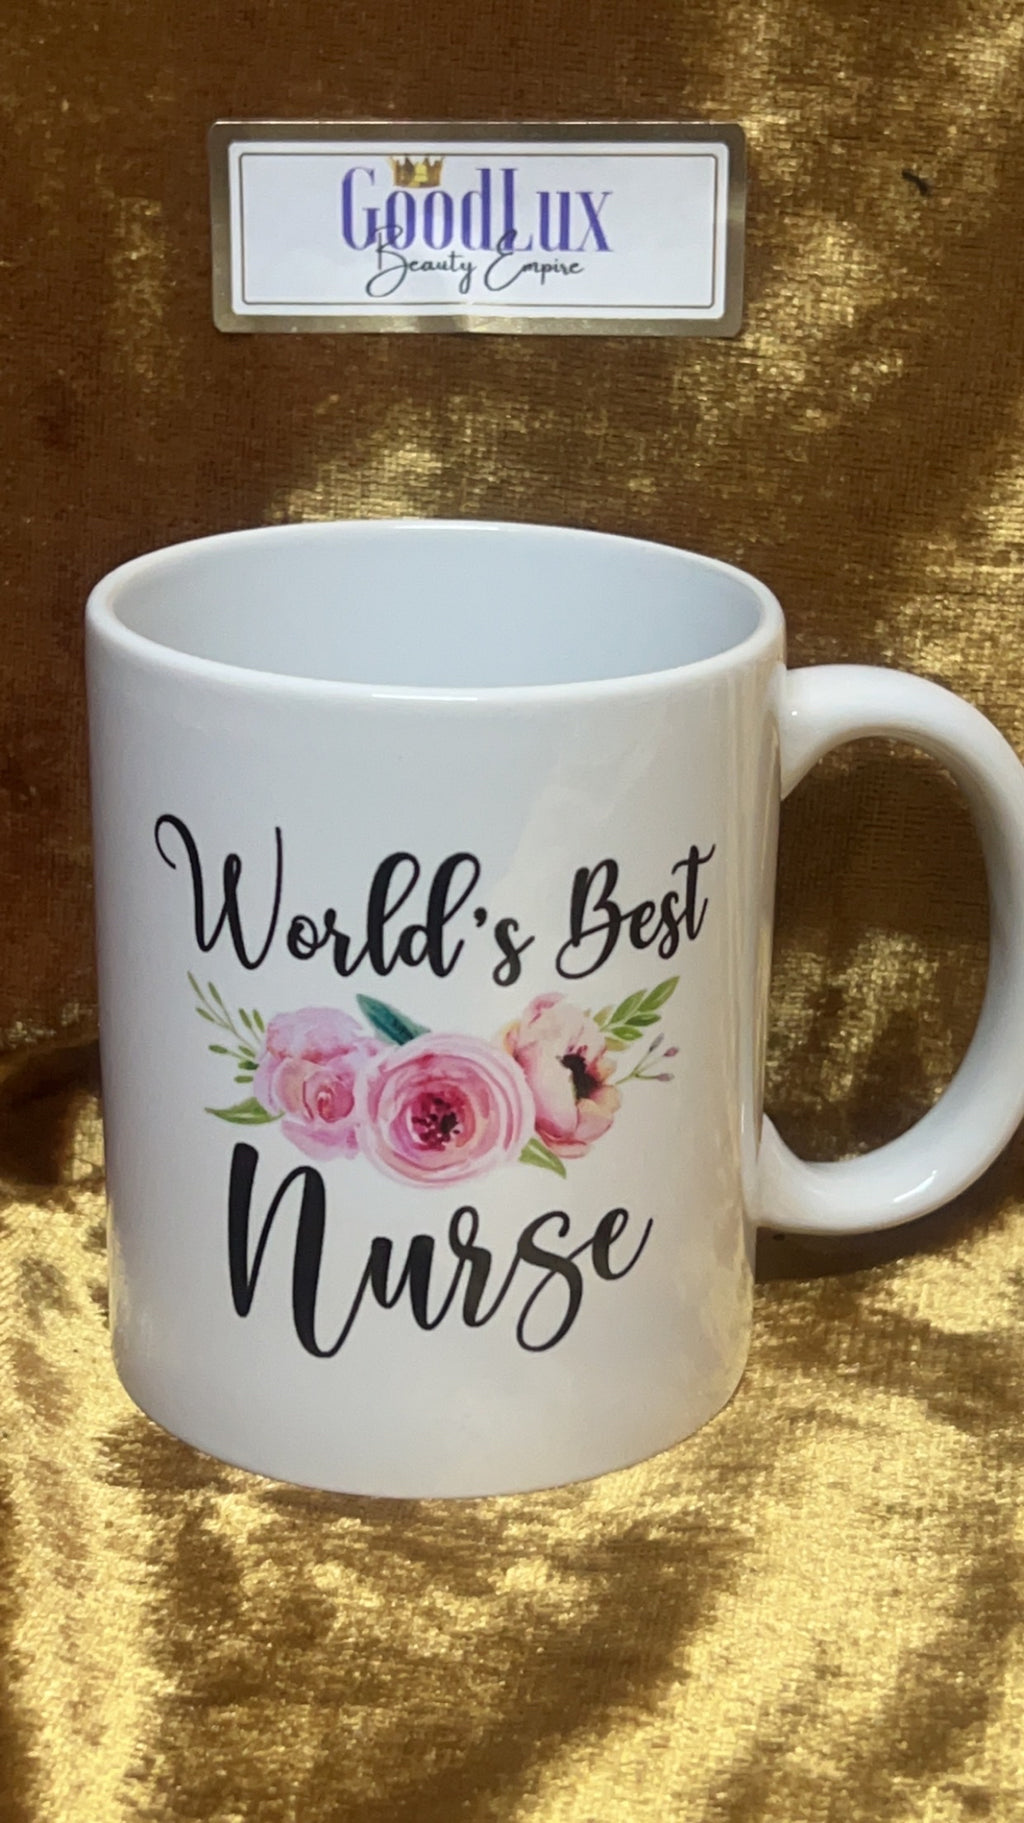 World’s Best Nurse mug